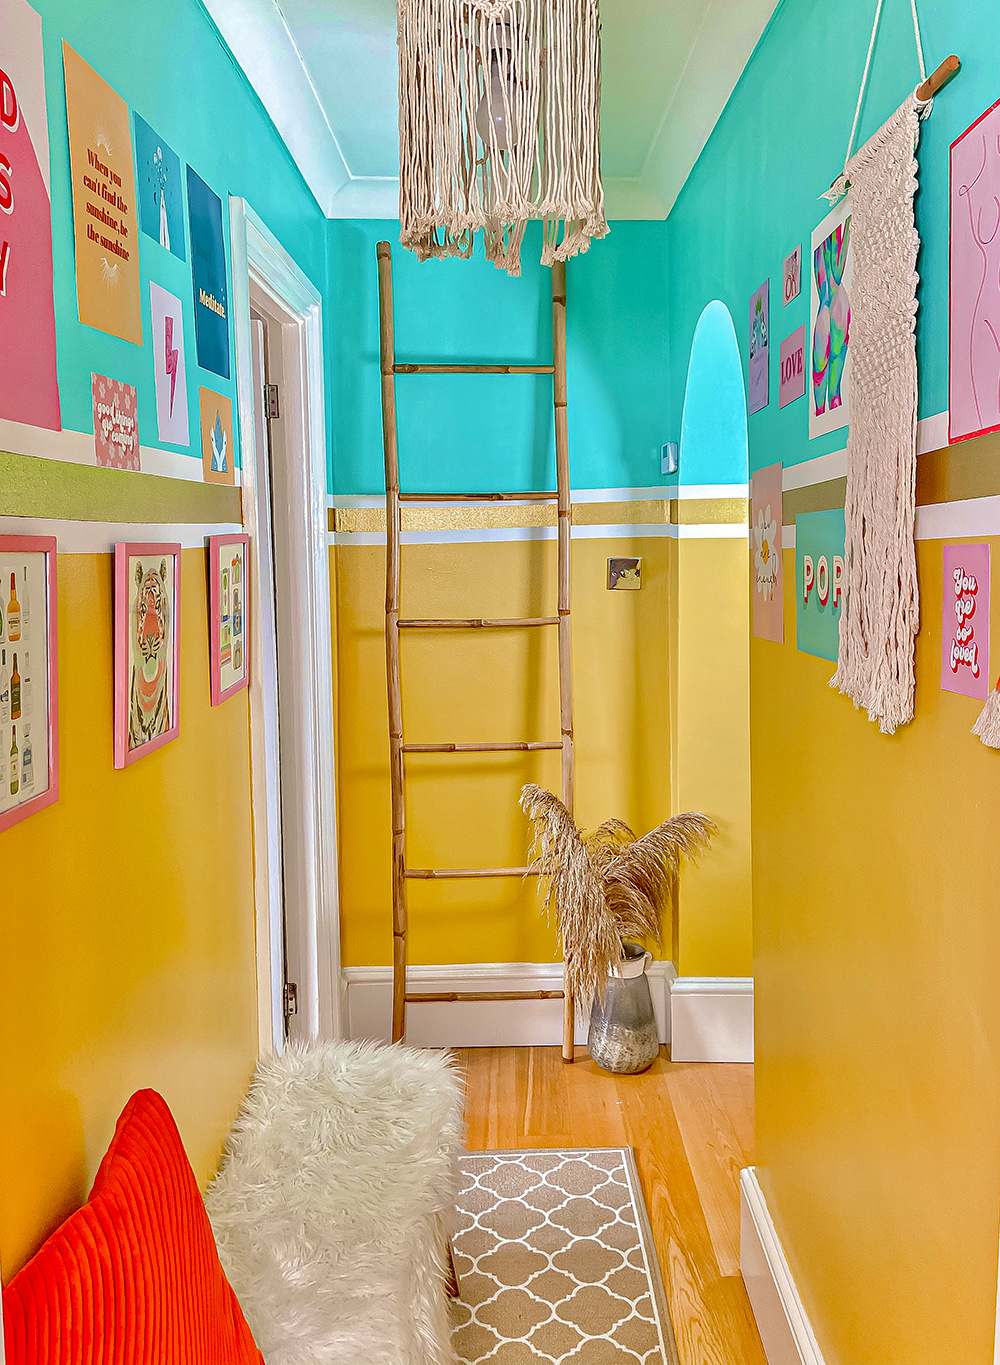 Colour blocking interior inspiration. Turquoise and mustard yellow hallway decor